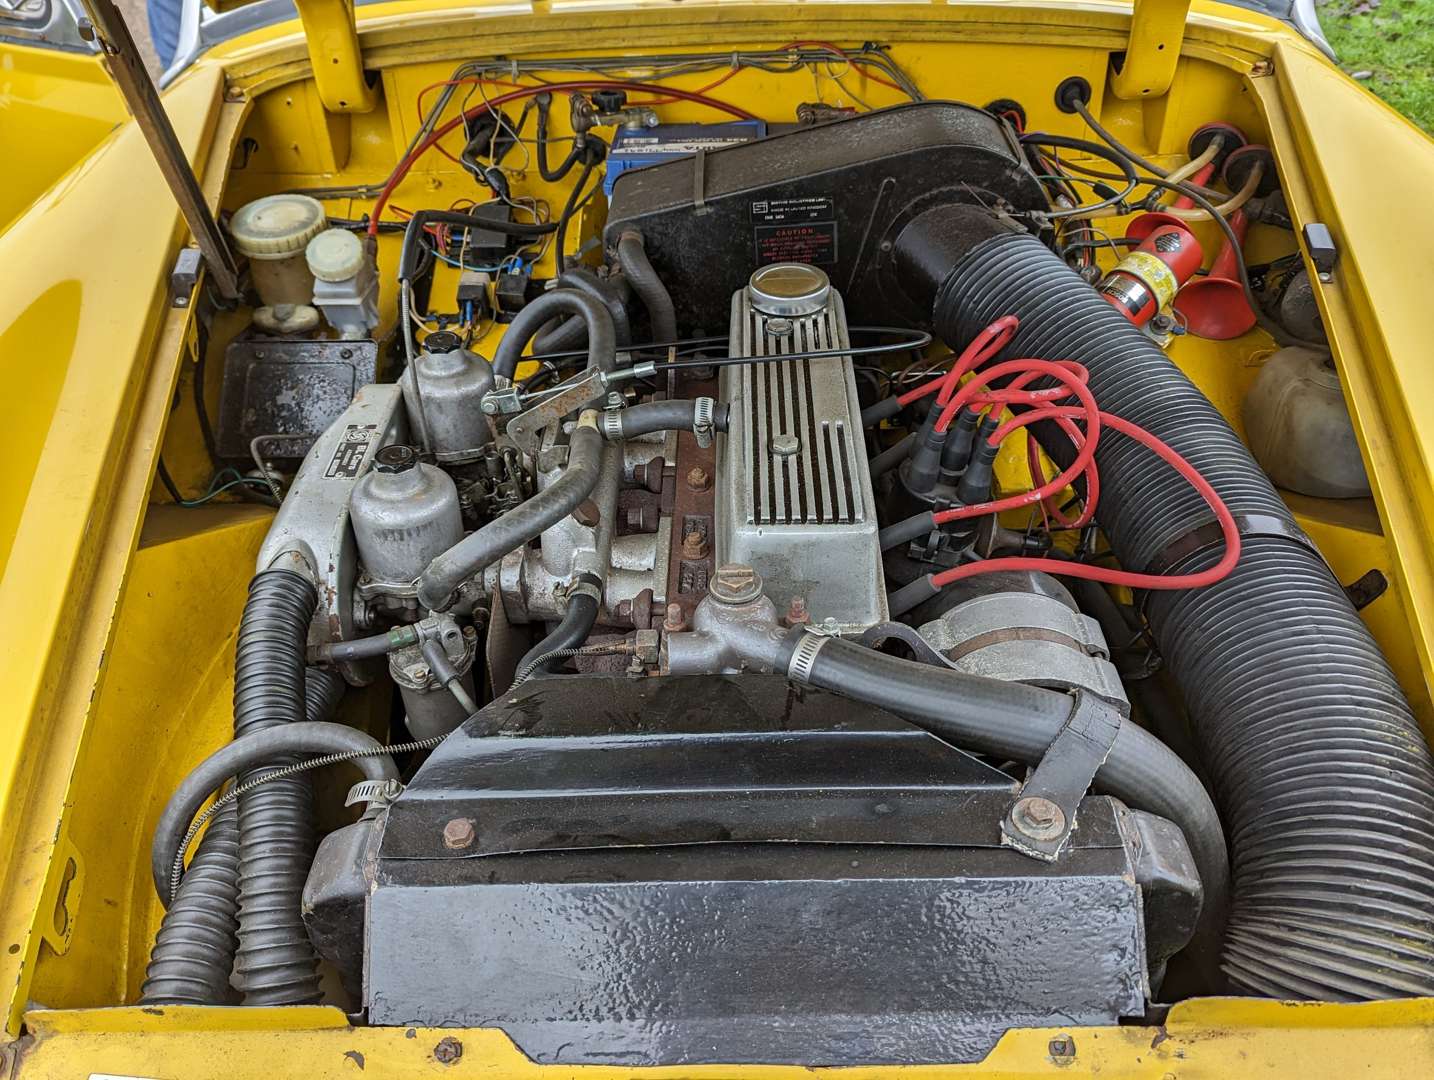 1979 MG MIDGET 1500 - Image 24 of 27